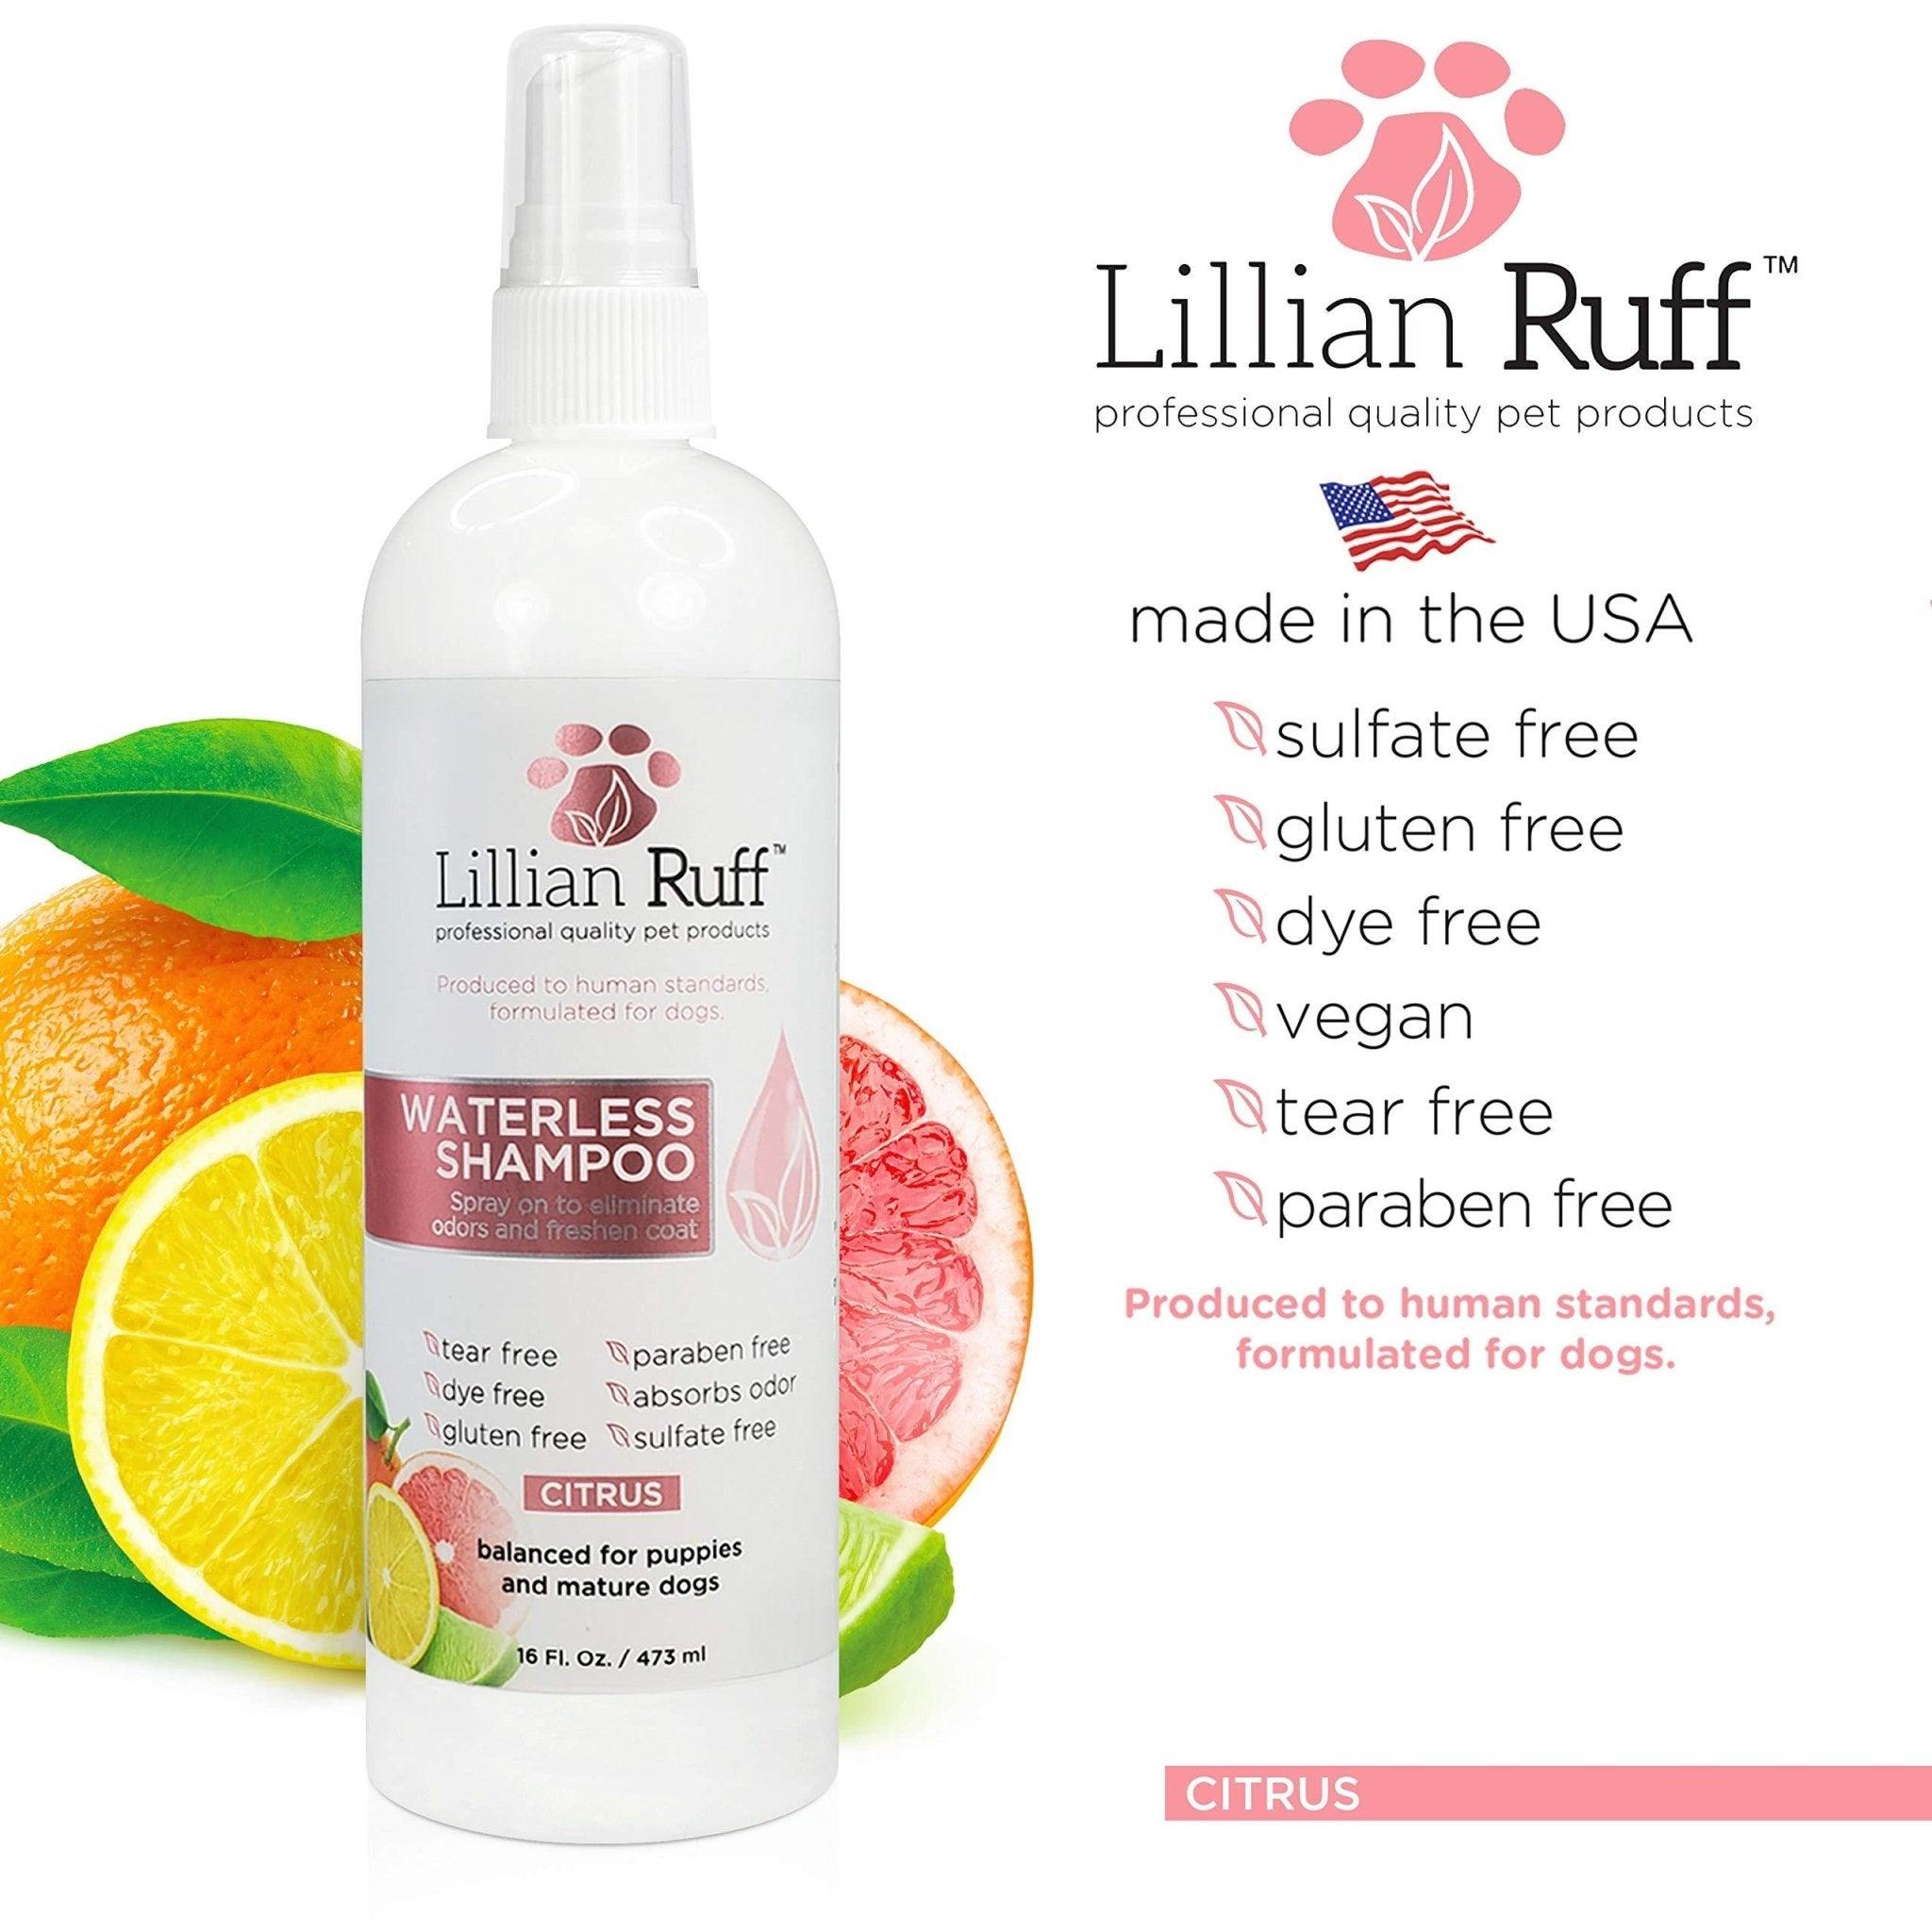 Waterless Shampoo - Citrus - Lillian Ruff-LR-WATERLESS16-CITRUS